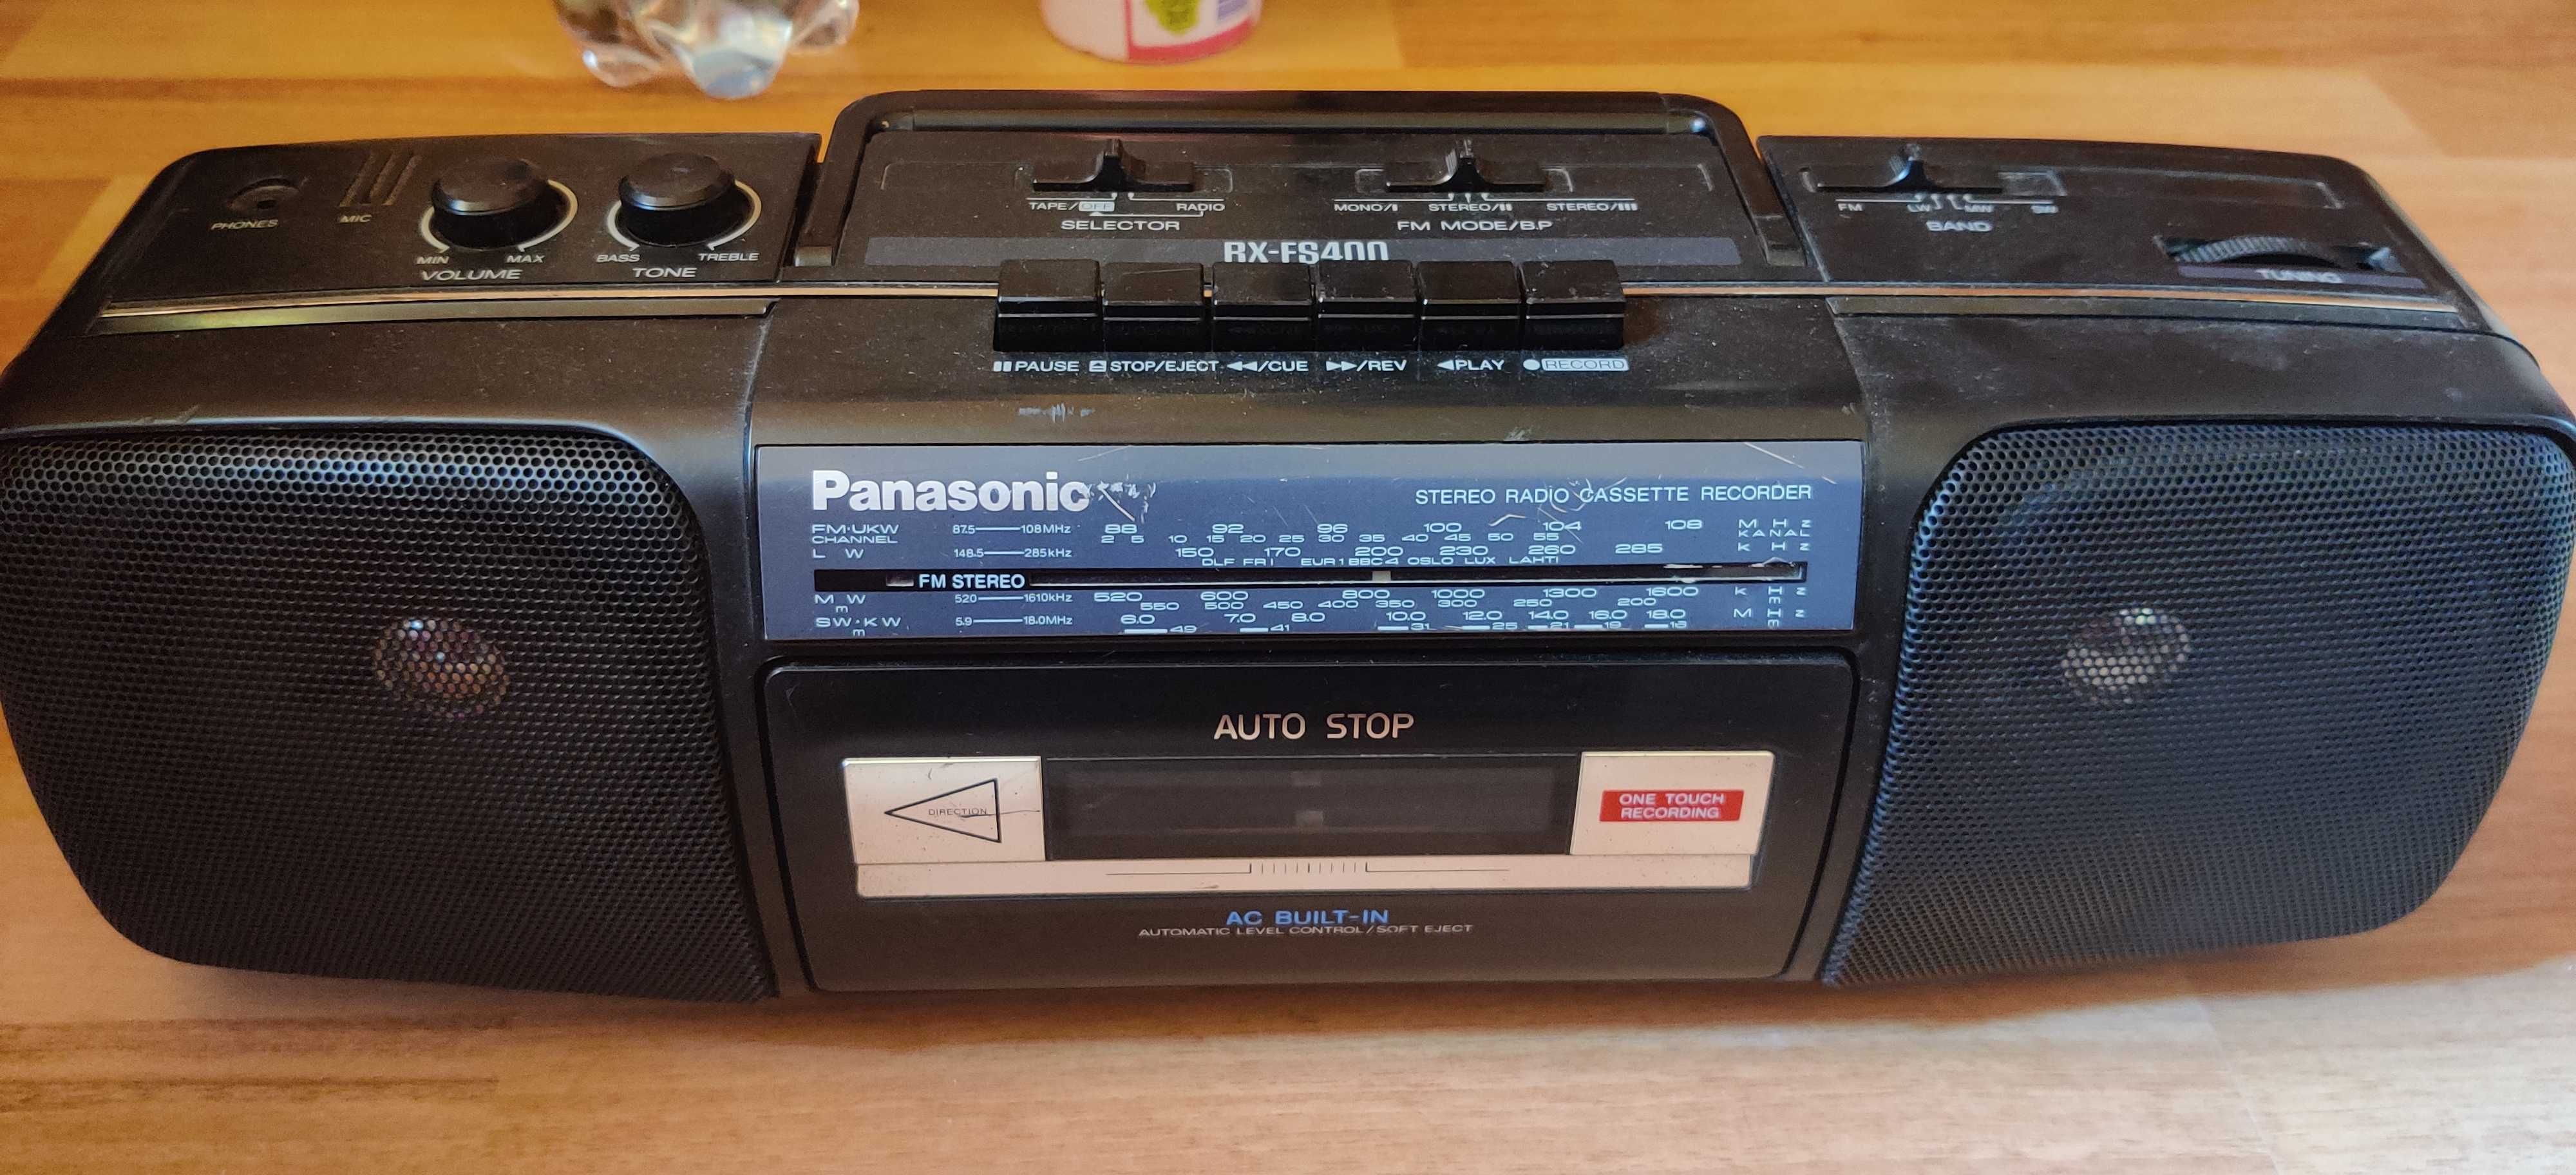 Radiocasetofon cu CD Sony si Panasonic